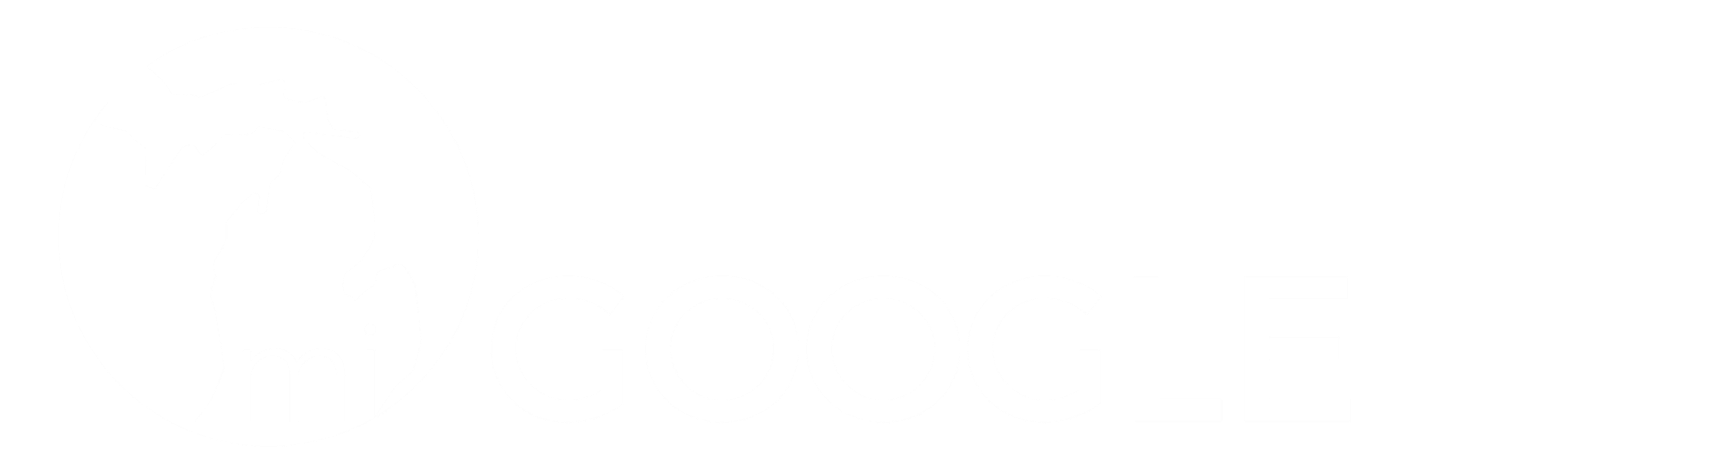 2022 miGoogle Banner